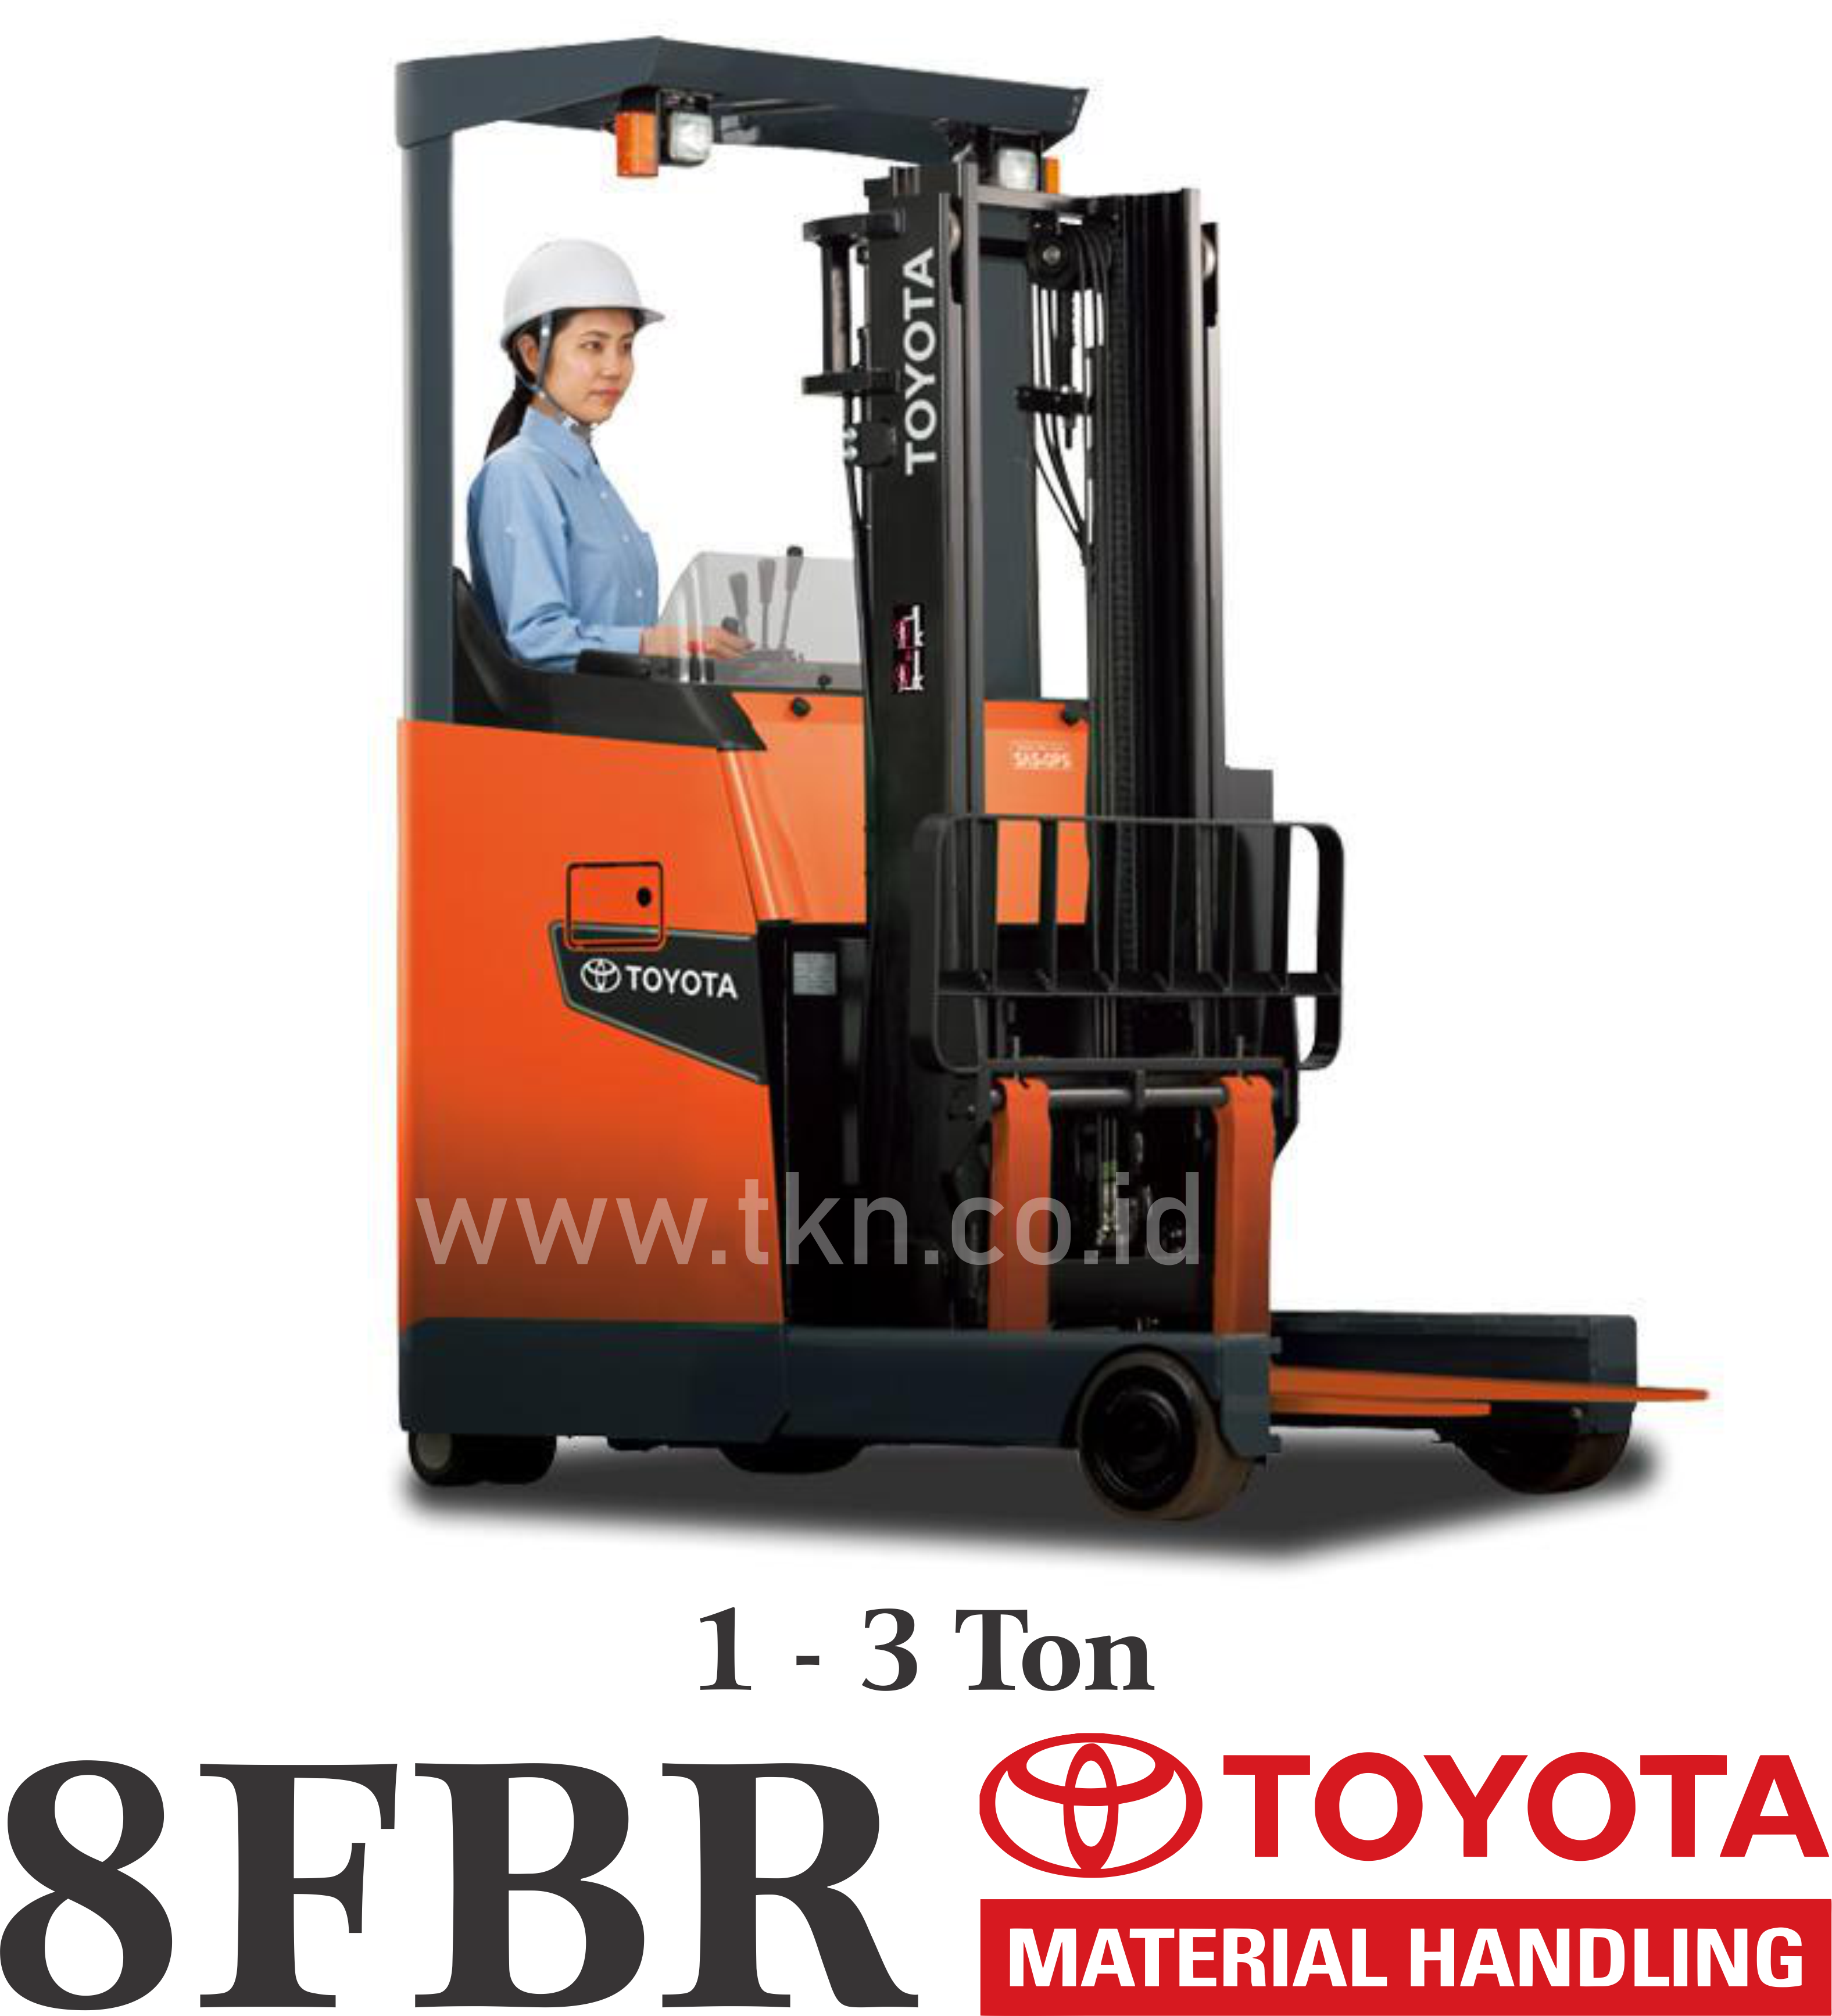 8FBR Reach Truck Toyota Forklift